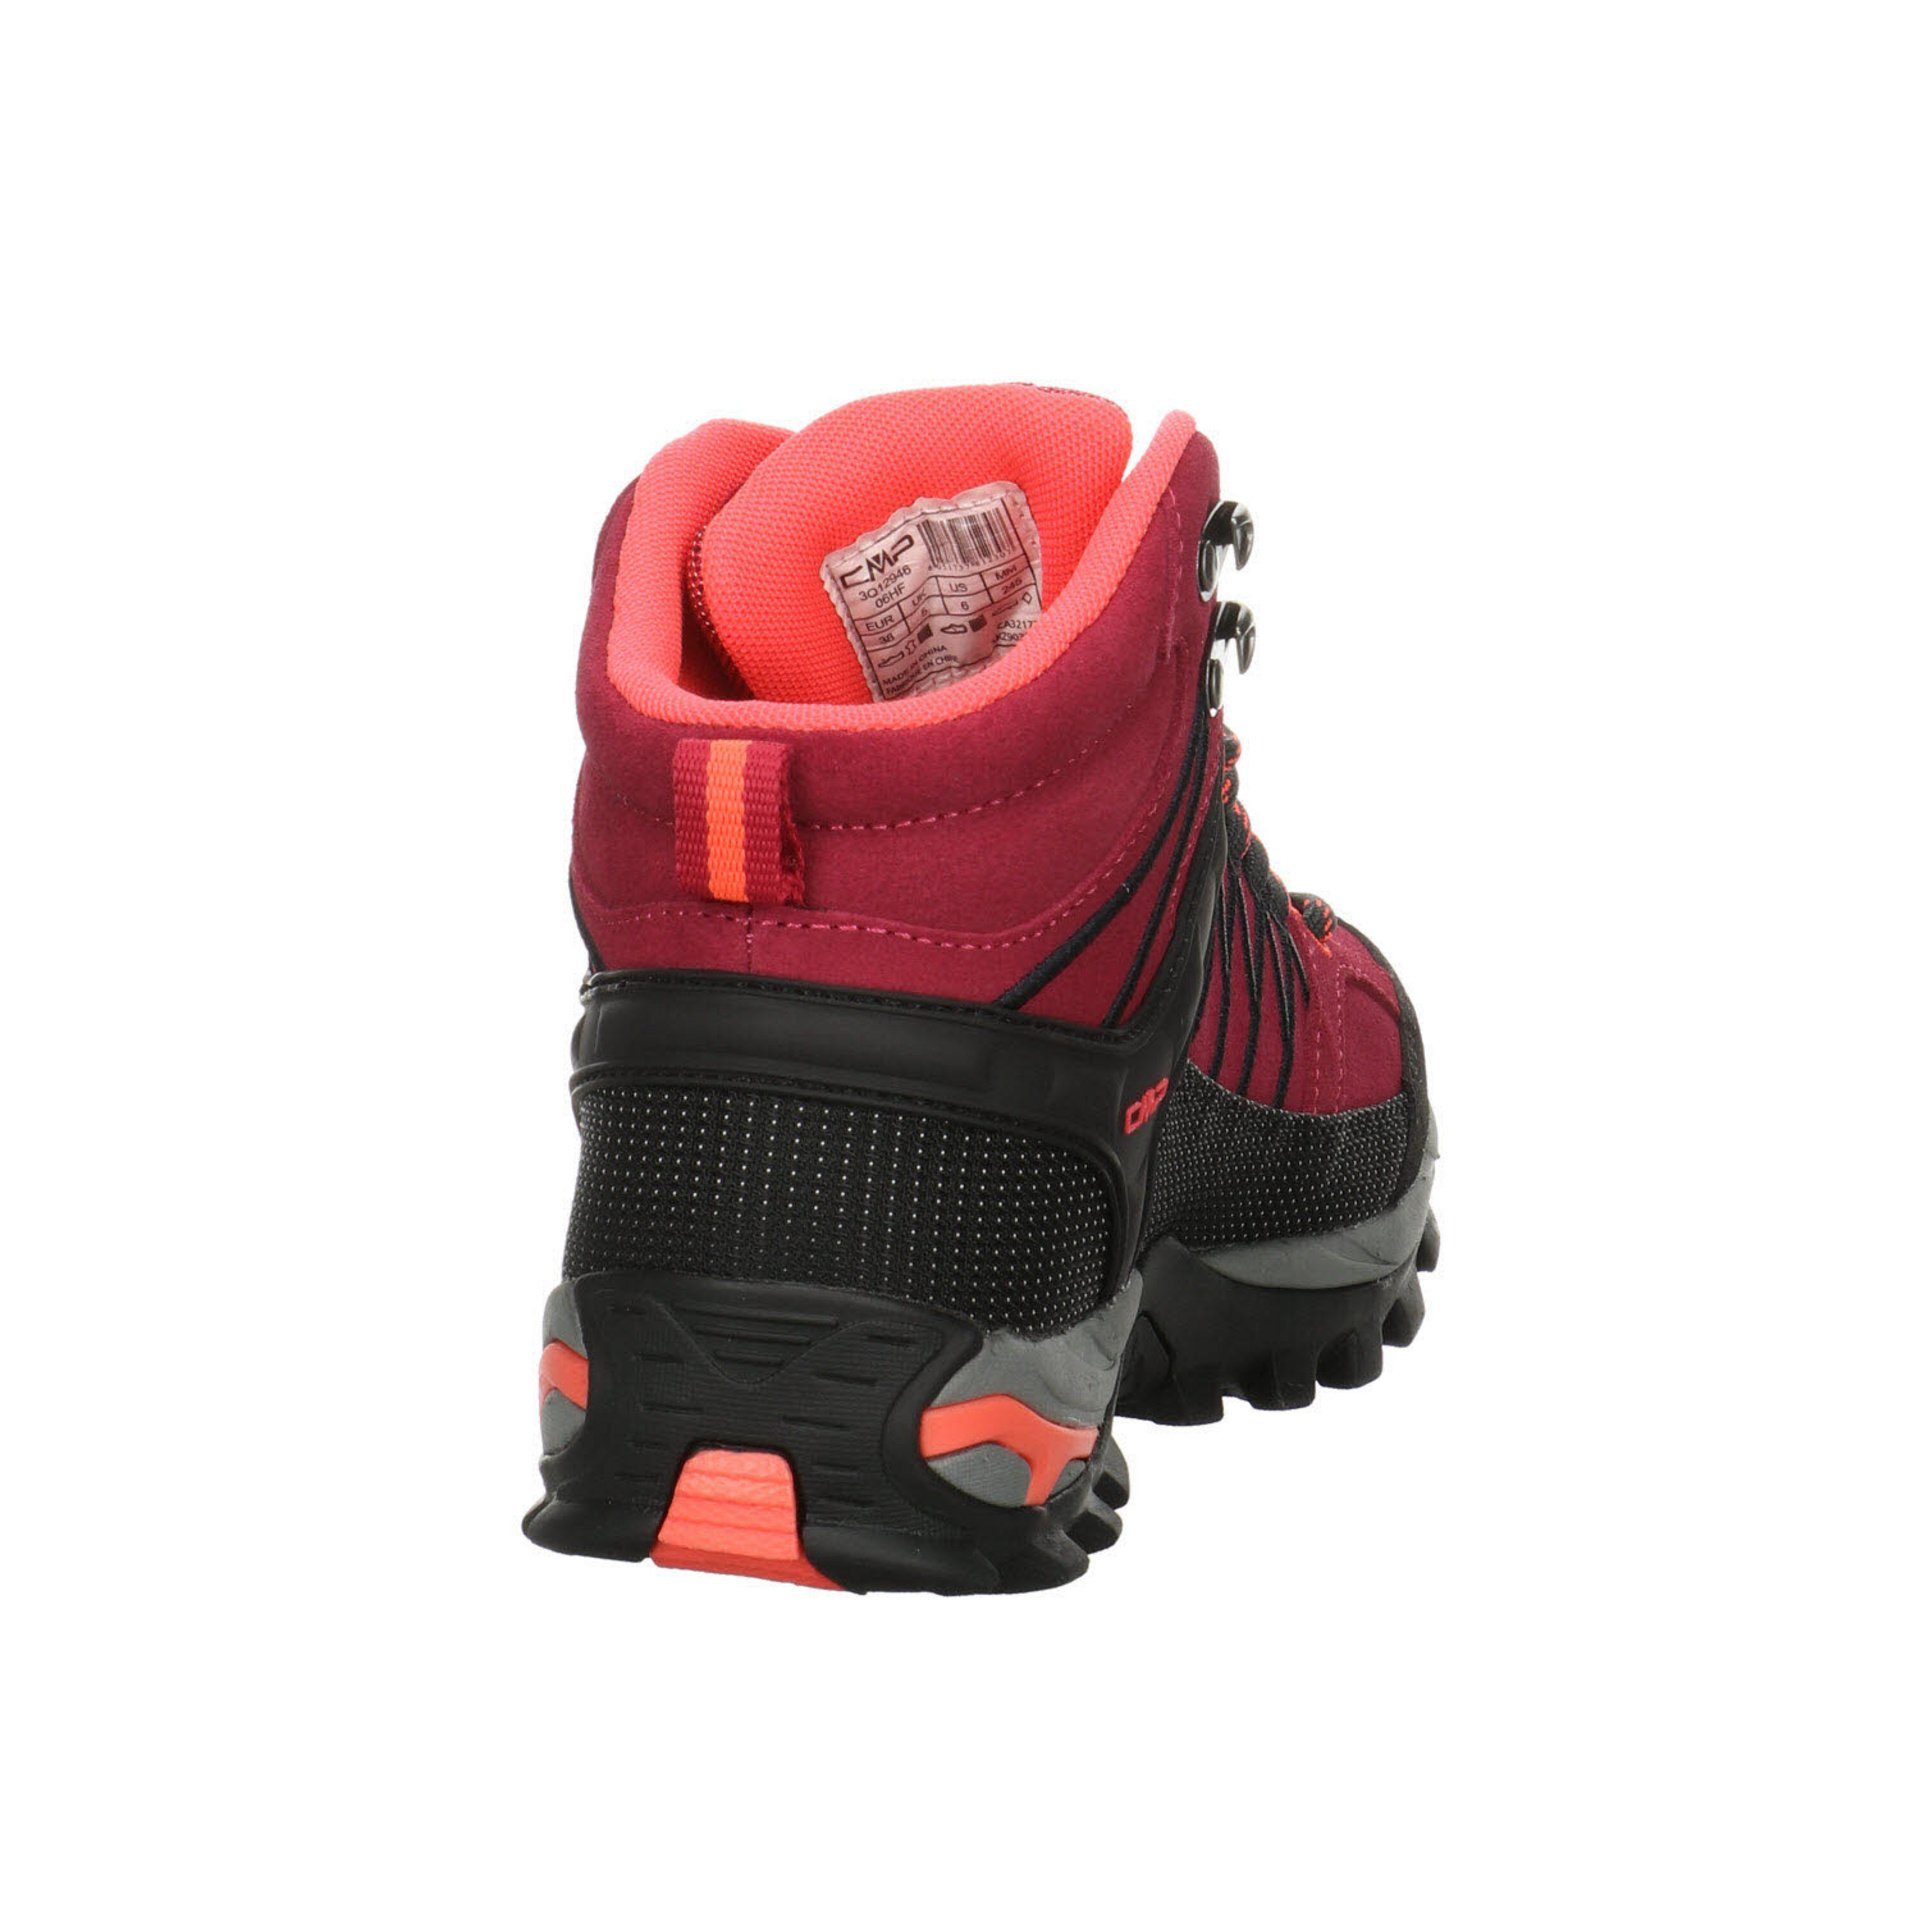 Outdoor Damen CMP Mid Outdoorschuh Outdoorschuh Leder-/Textilkombination Rigel Schuhe MAGENTA-ANTRACITE